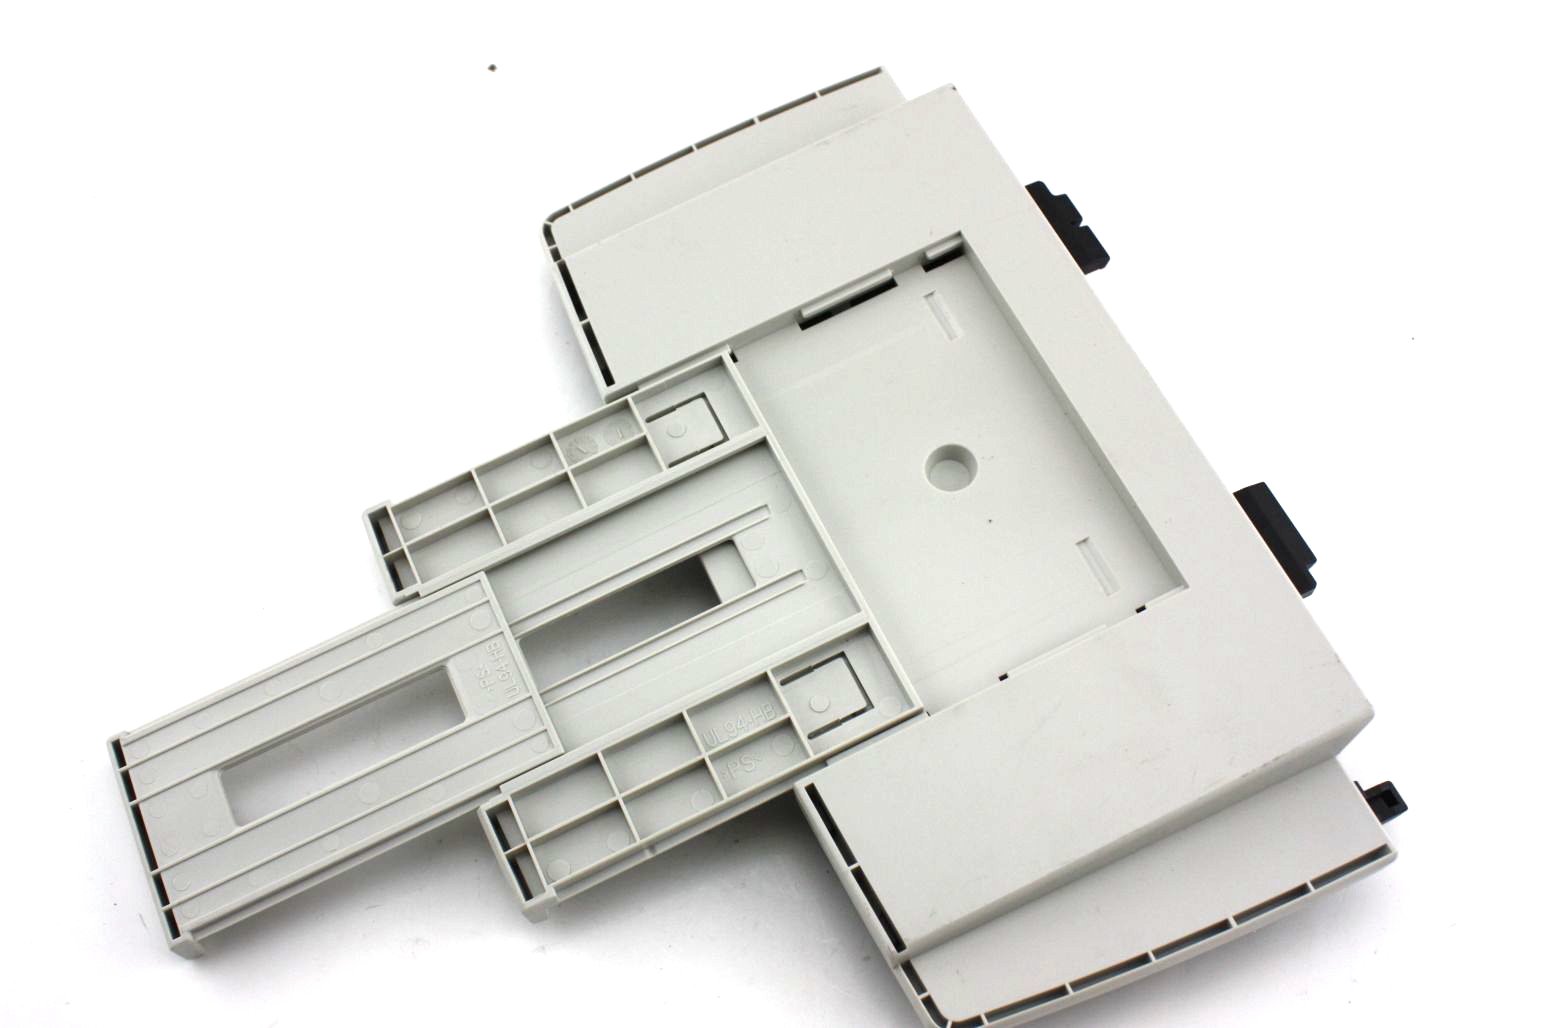 Genuine Fujitsu Scanner Paper Tray Input Chute Feeder Fi-6130 Fi-6130Z Fi-6140Z